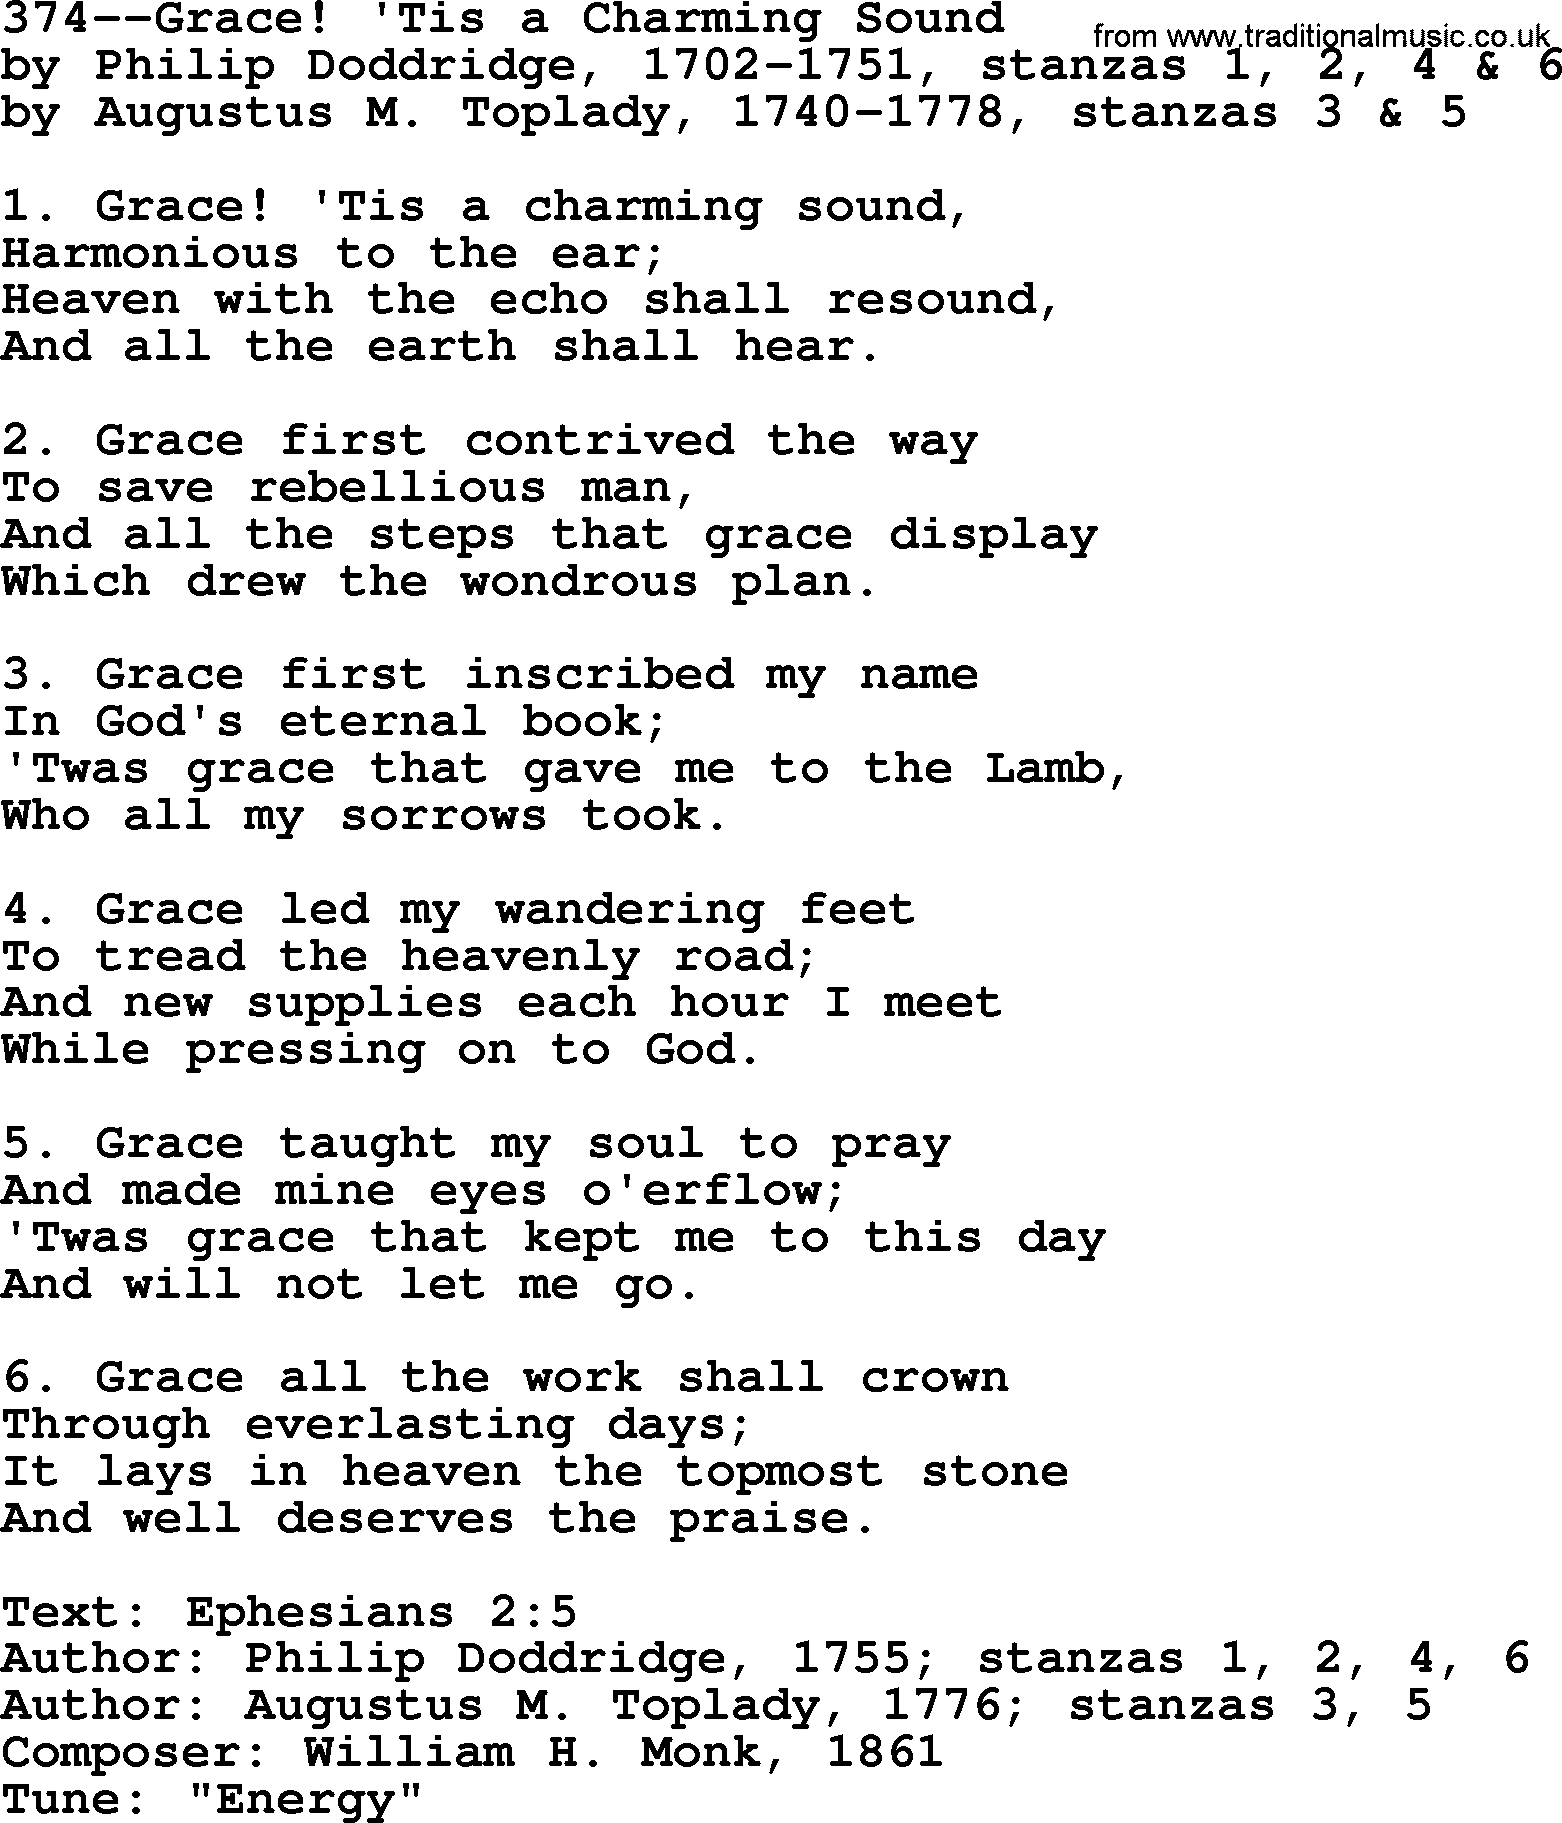 Lutheran Hymn: 374--Grace! 'Tis a Charming Sound.txt lyrics with PDF